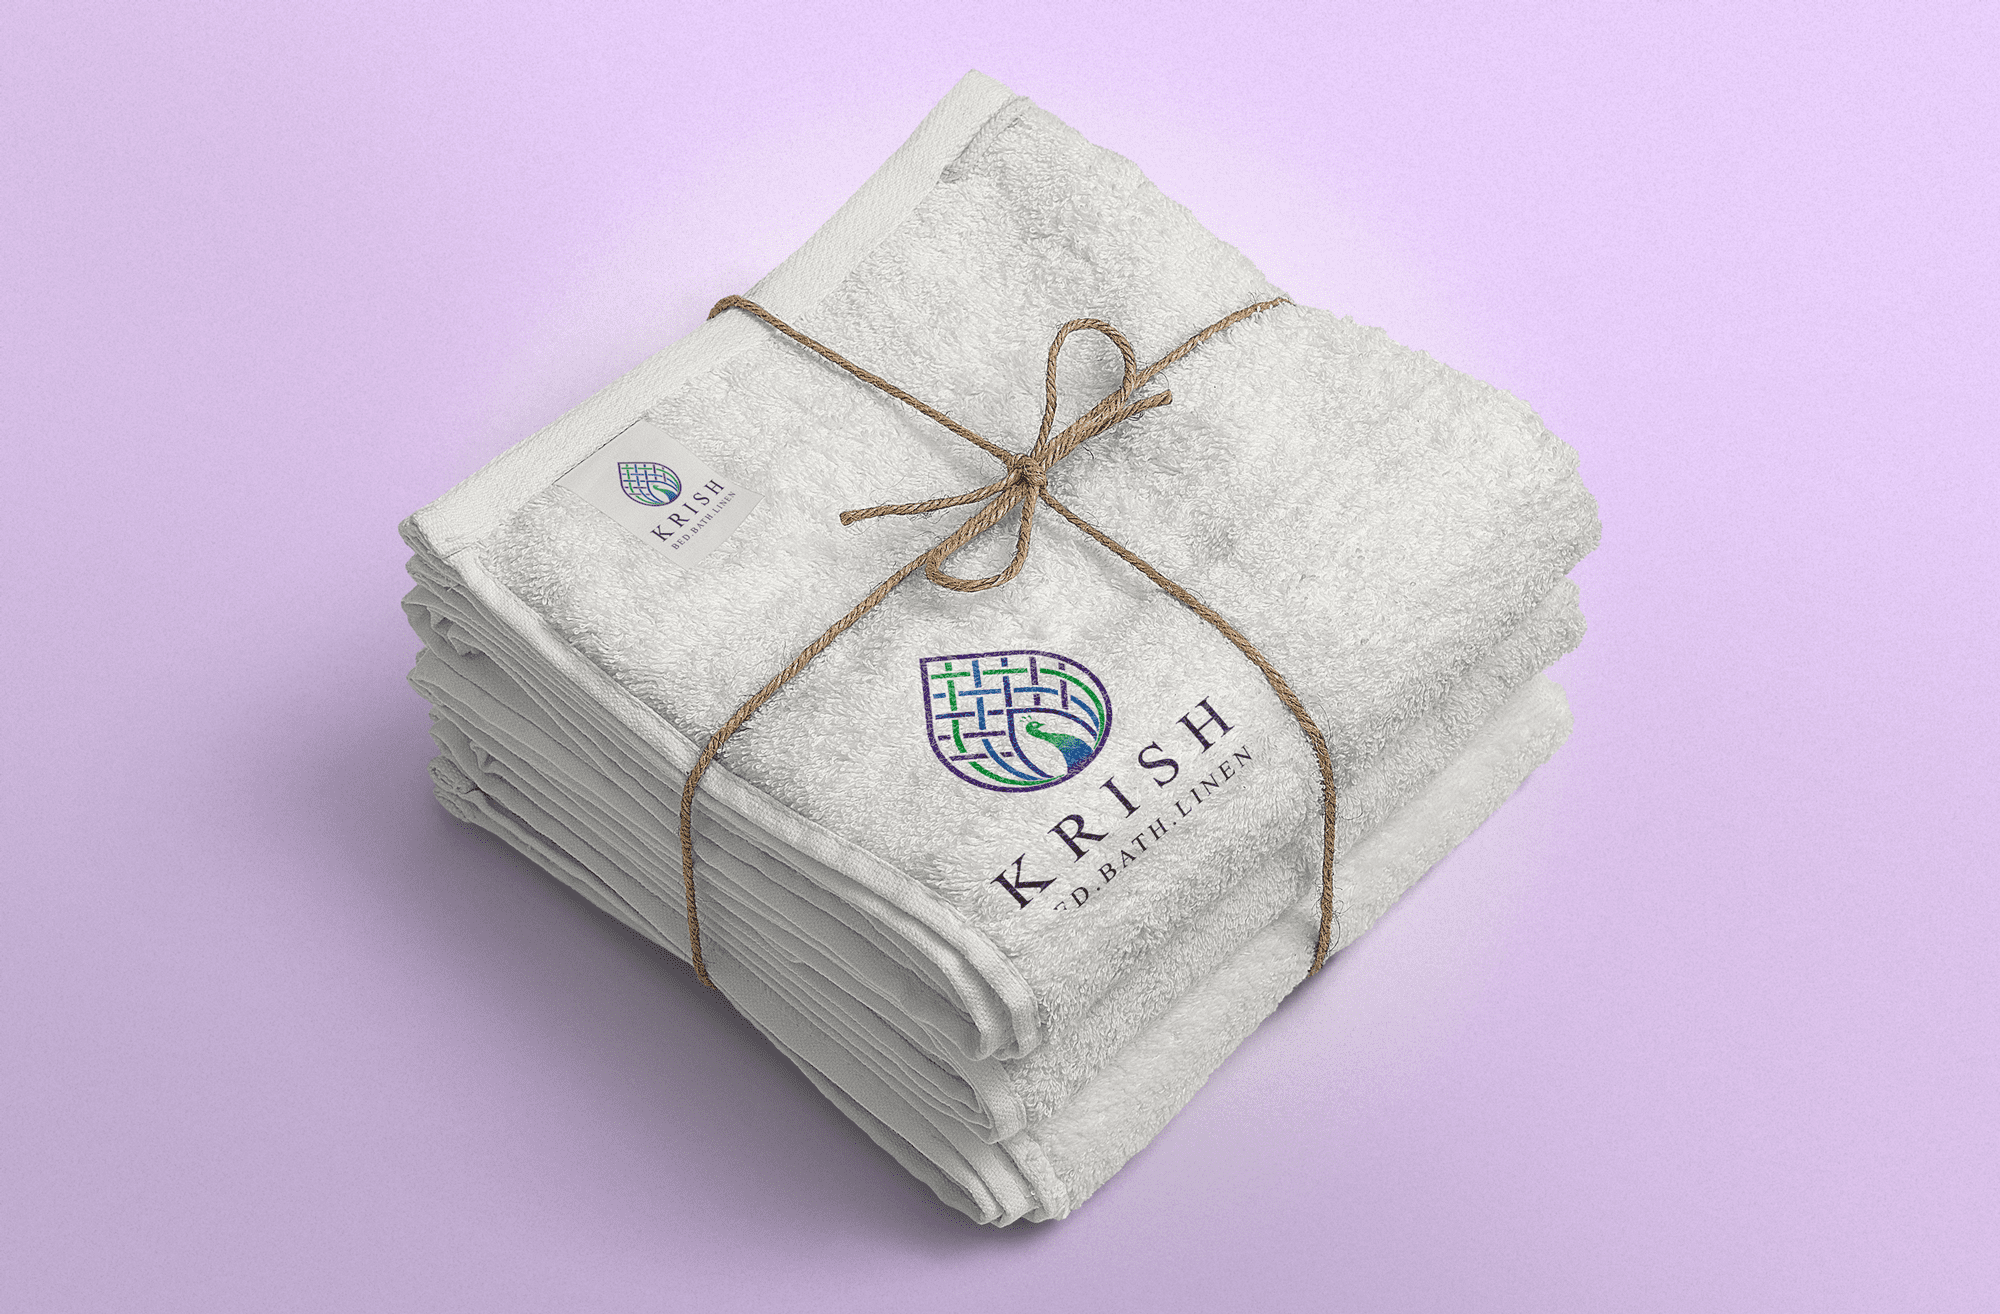 Krish towel Graphic Design, Branding Packaging Design in Karur by Creative Prints thecreativeprints